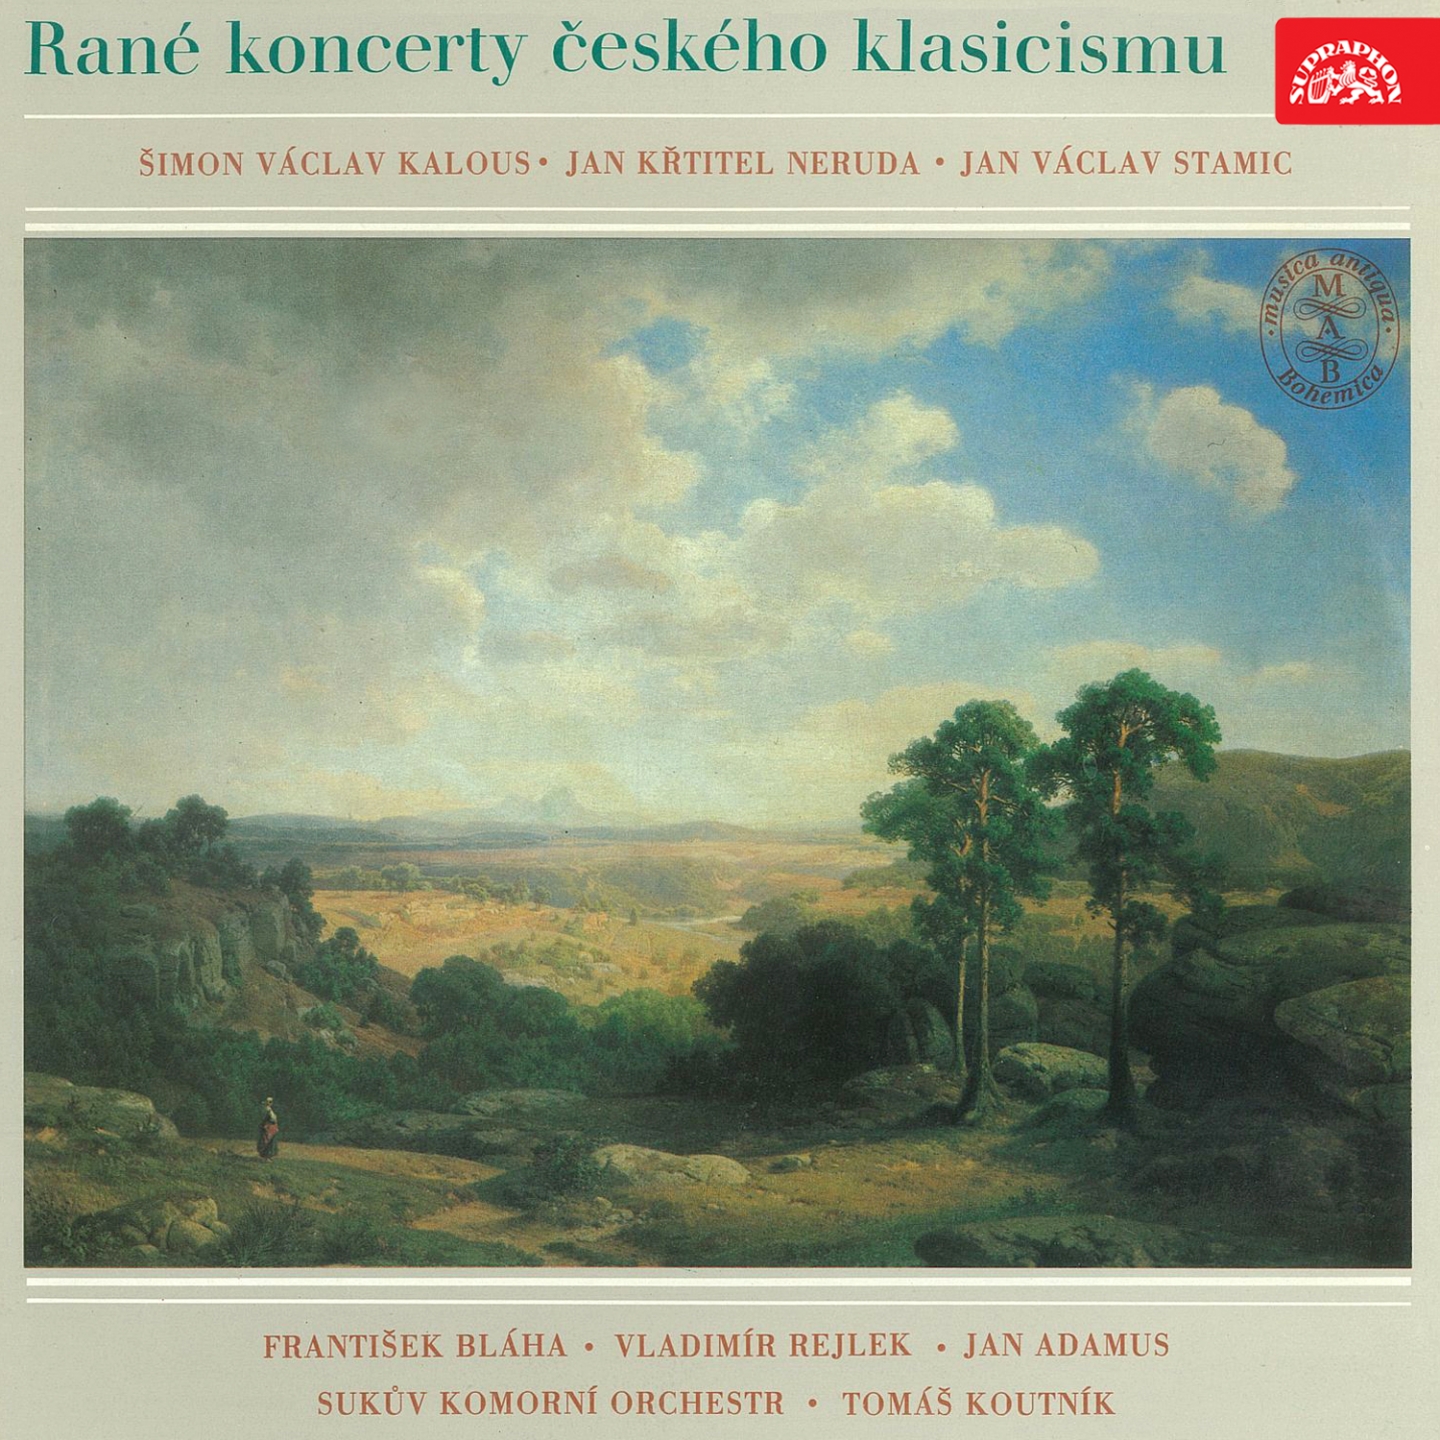 Clarinet Concerto in E-Flat Major: III. Rondo